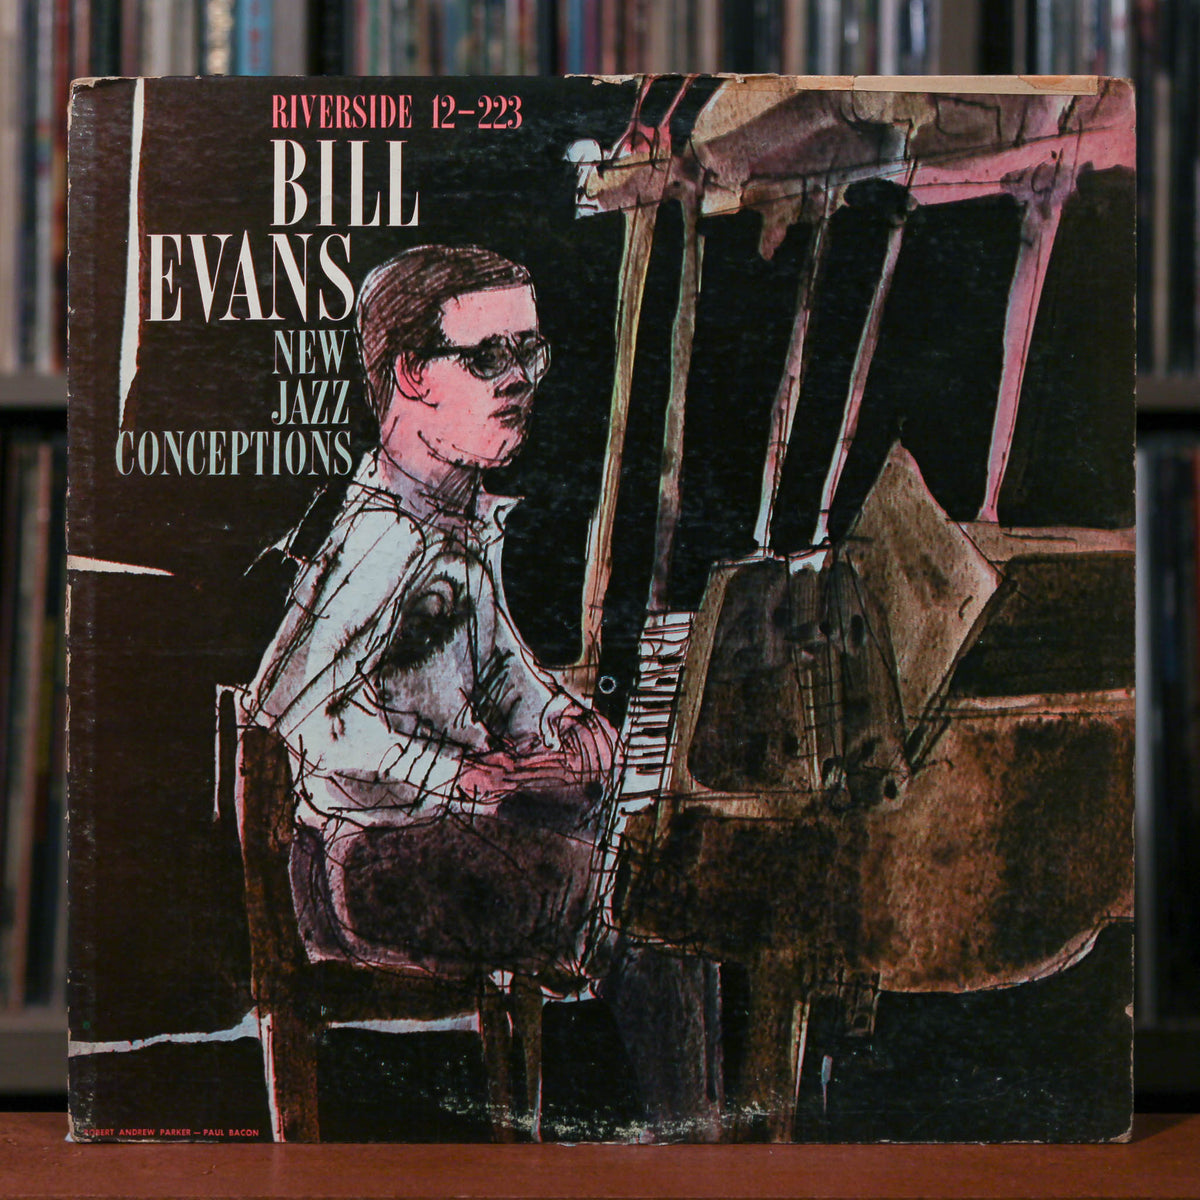 Bill Evans - New Jazz Conceptions - 1965 Riverside Records, G+/VG+